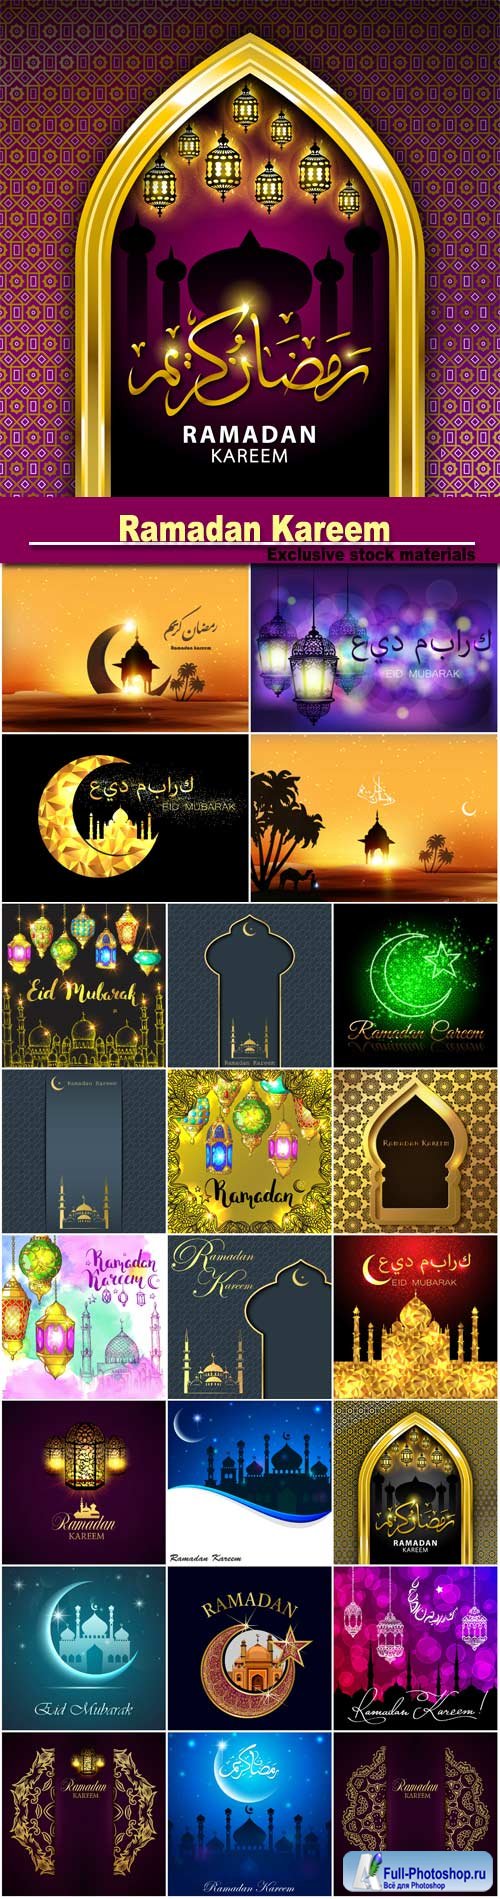 Ramadan Kareem, a Muslim holiday, beautiful backgrounds vector